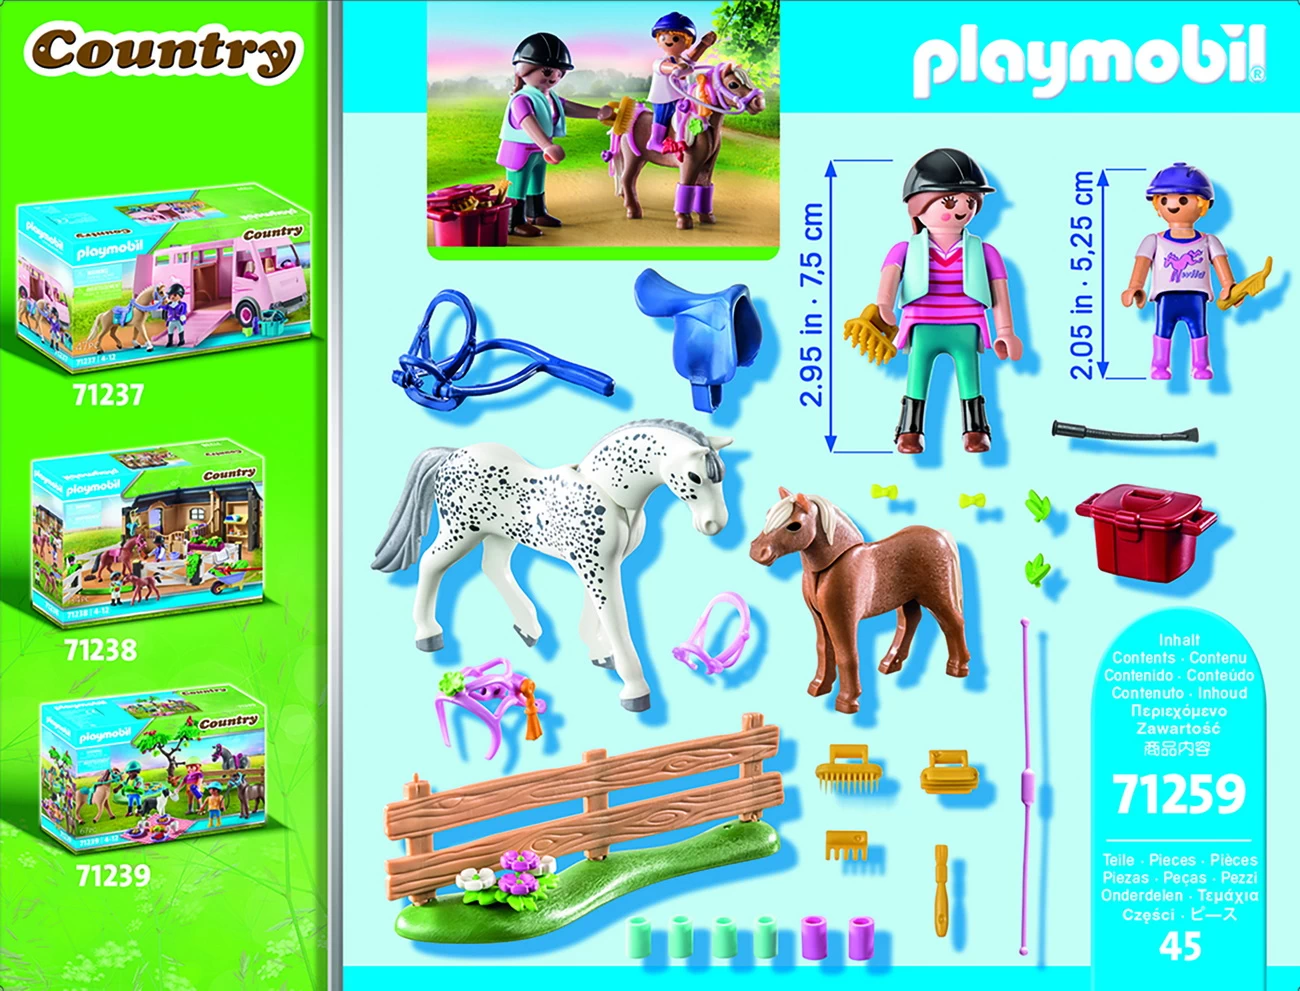 Playmobil 71259 - Starter Pack Pferdepflege - Country